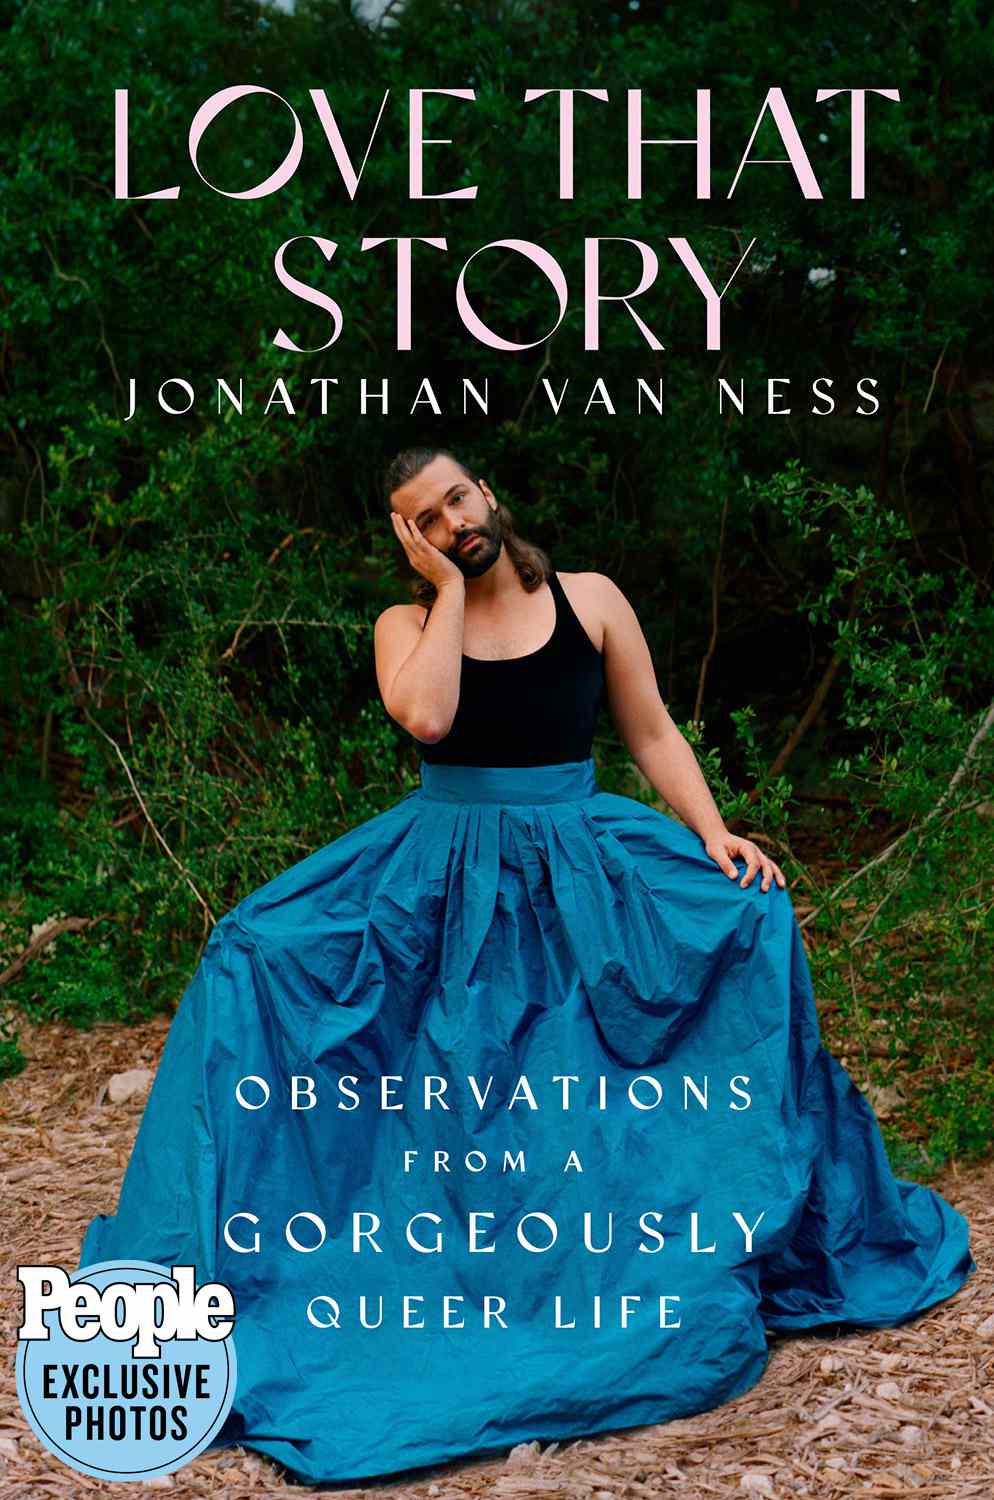 Jonathan Van Ness book cover